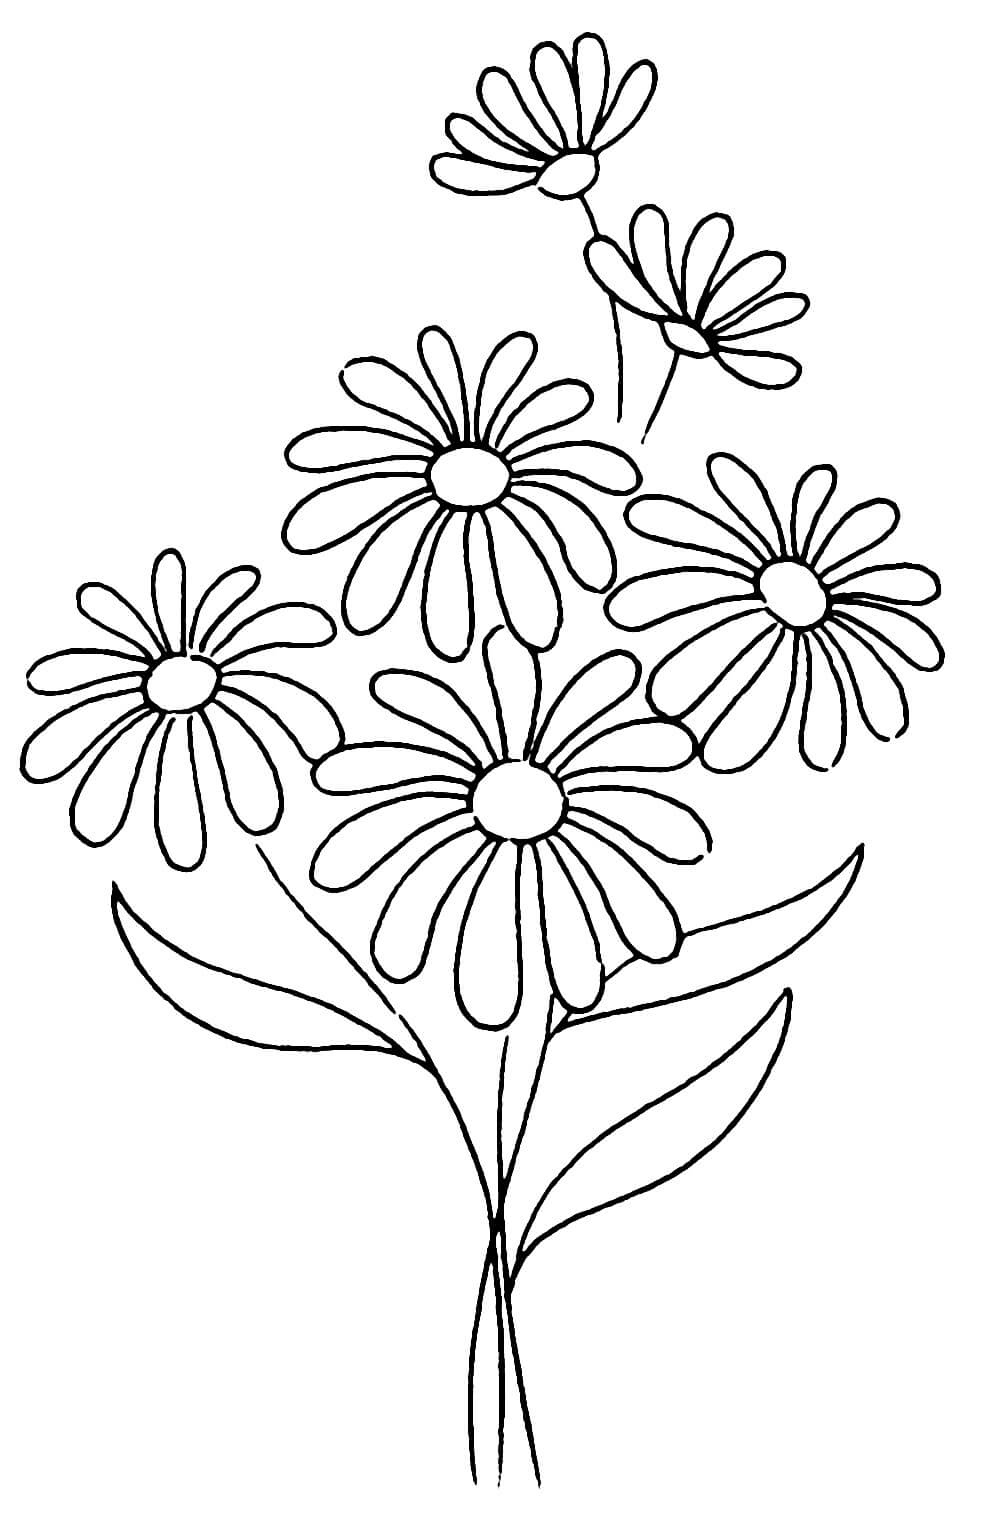 How to Draw a Kawaii Flower Easy  YouTube